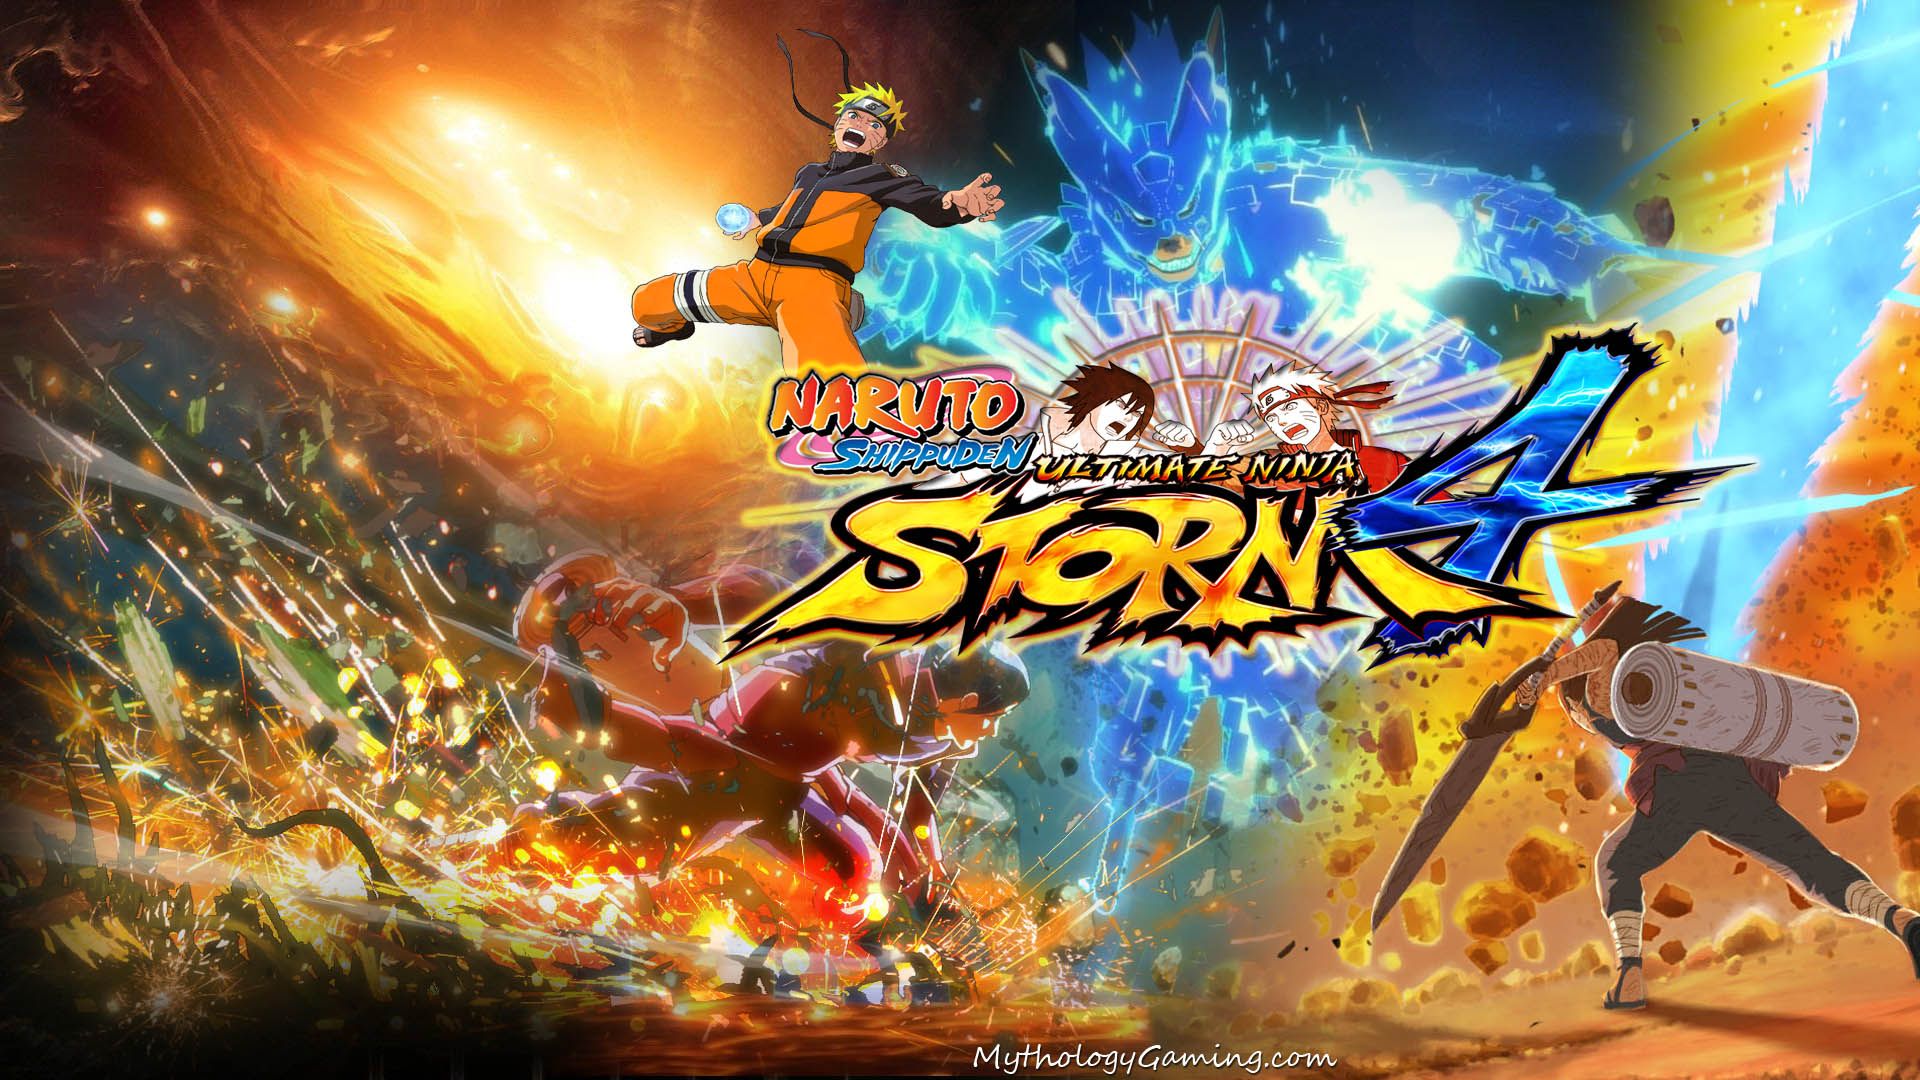 Naruto Ultimate Ninja Storm 2 Wallpaper. Naruto Storm 4 Wallpaper, Spring Storm Wallpaper and Summer Storm Wallpaper